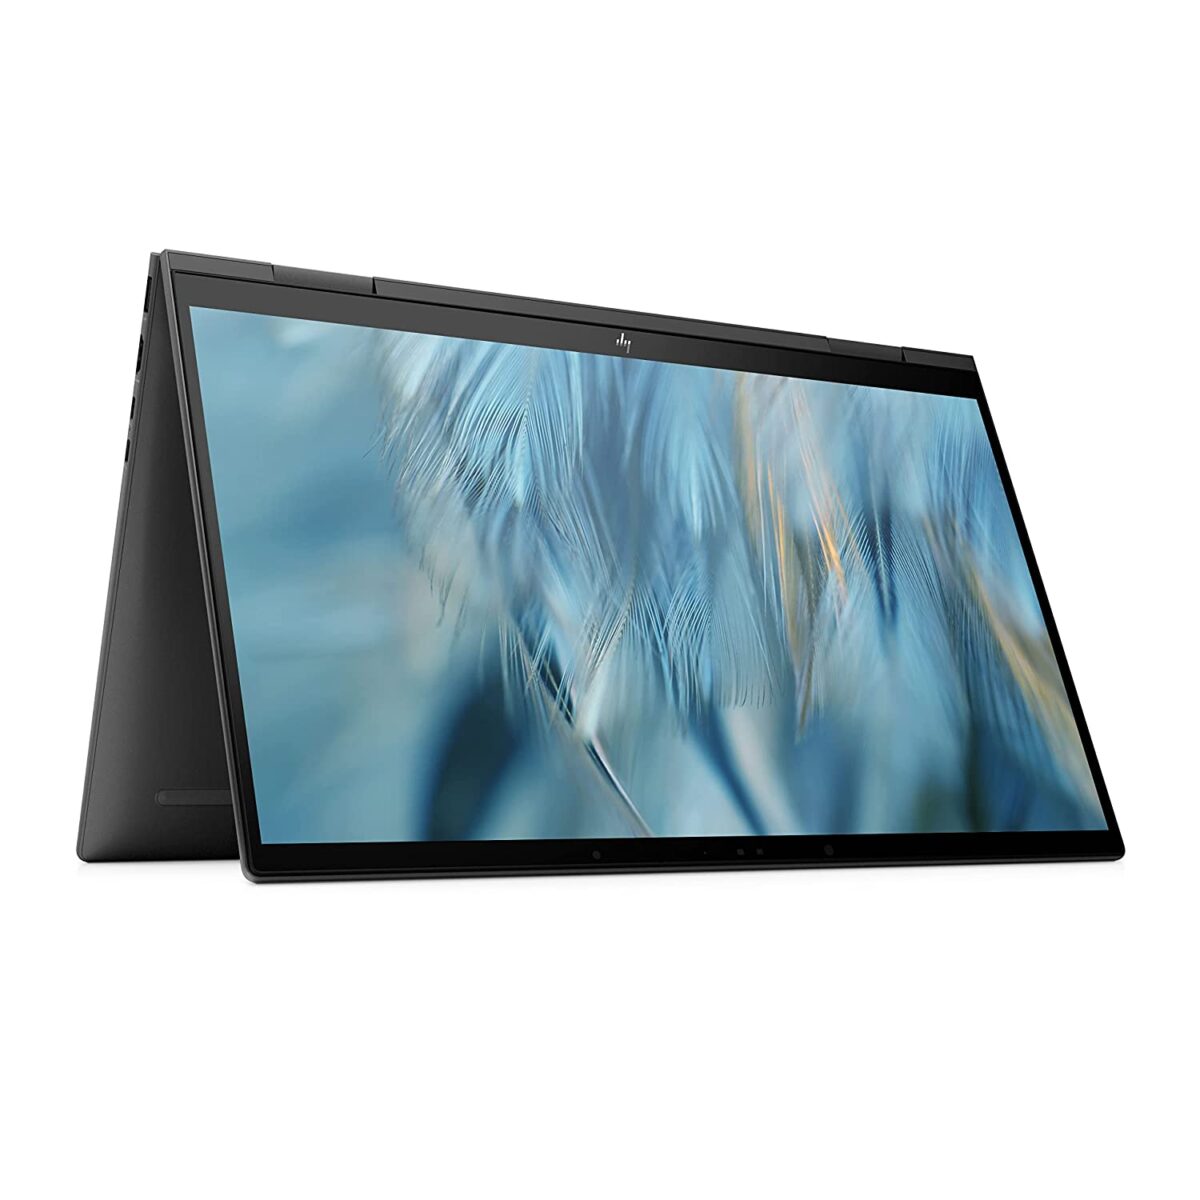 HP Envy x360 15-ew0037TU Laptop Price Specs [ 12th gen Intel Core i5-1235U / 8GB ram / 512GB SSD ]